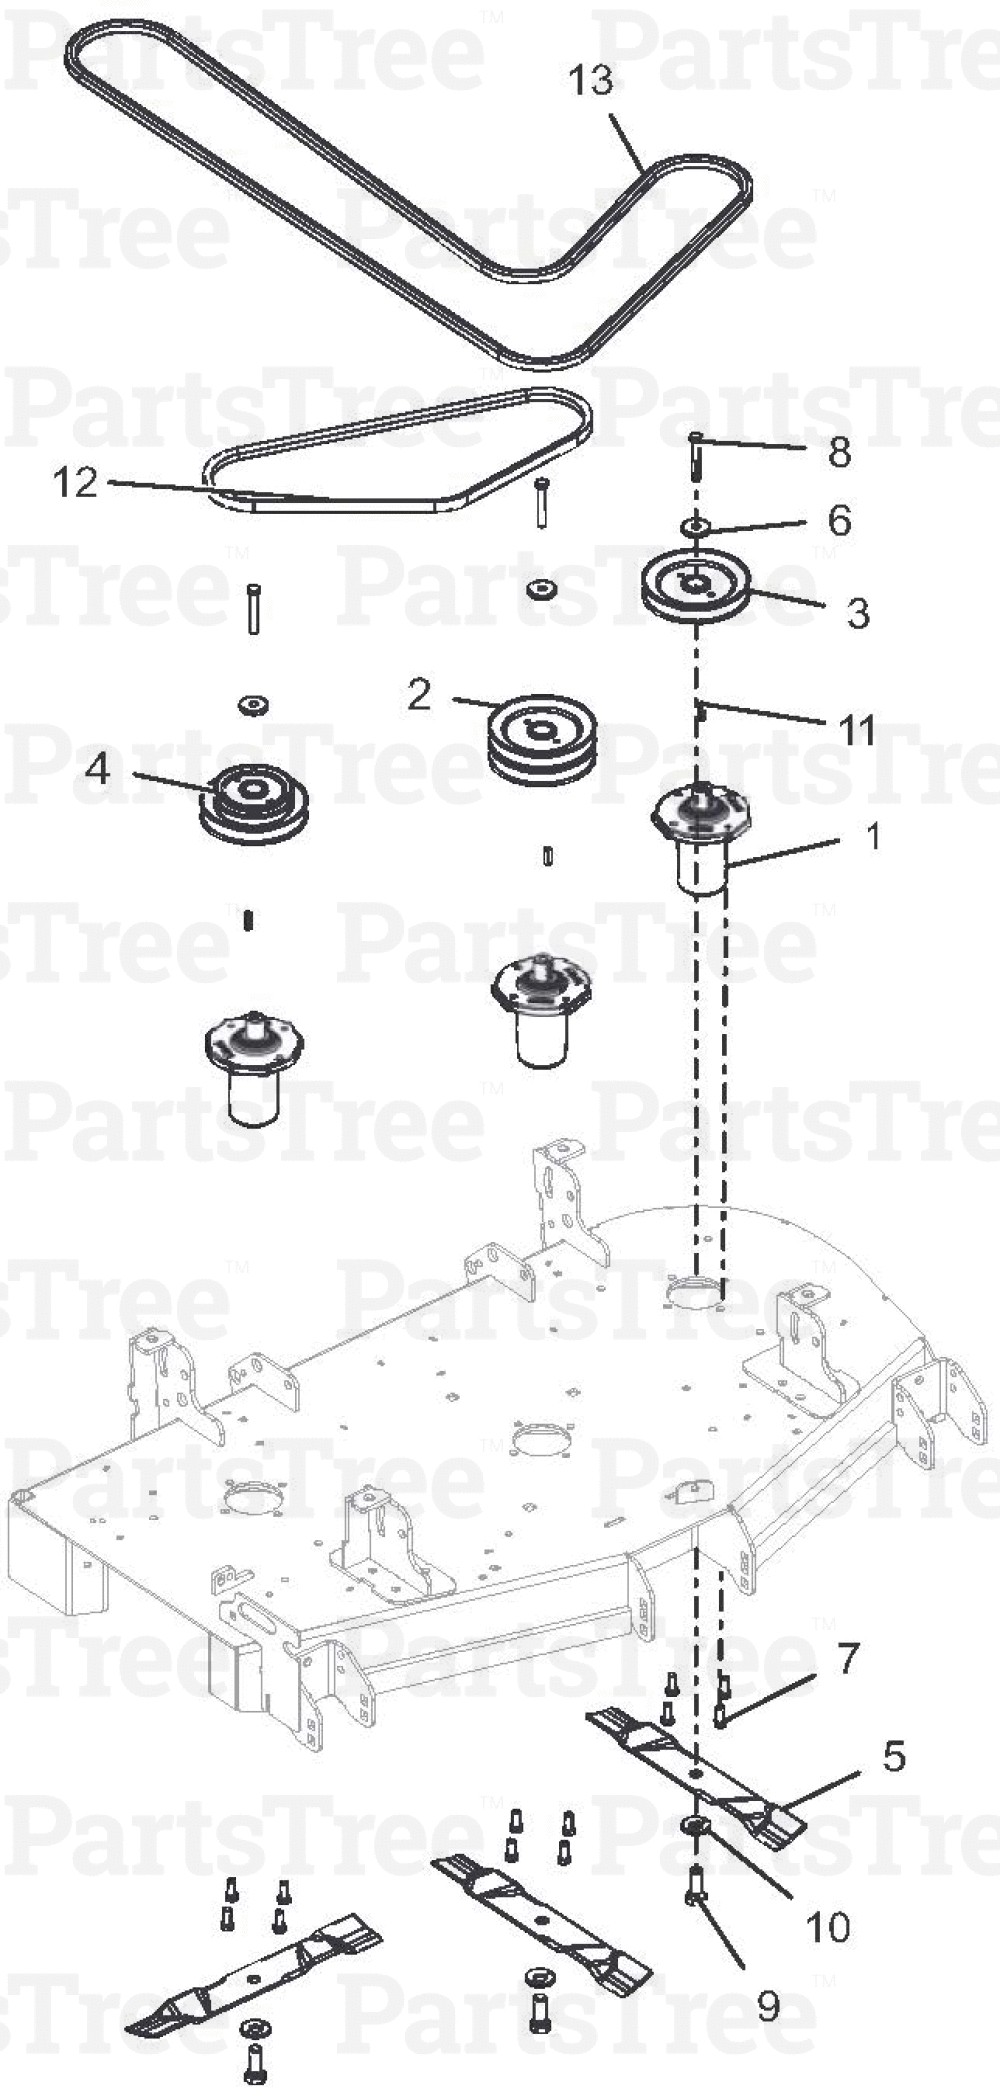 Gravely Mower Parts Diagram Gravely Gravely Pro Turn 148 Mercial 48 Zero Turn Mower Of Gravely Mower Parts Diagram